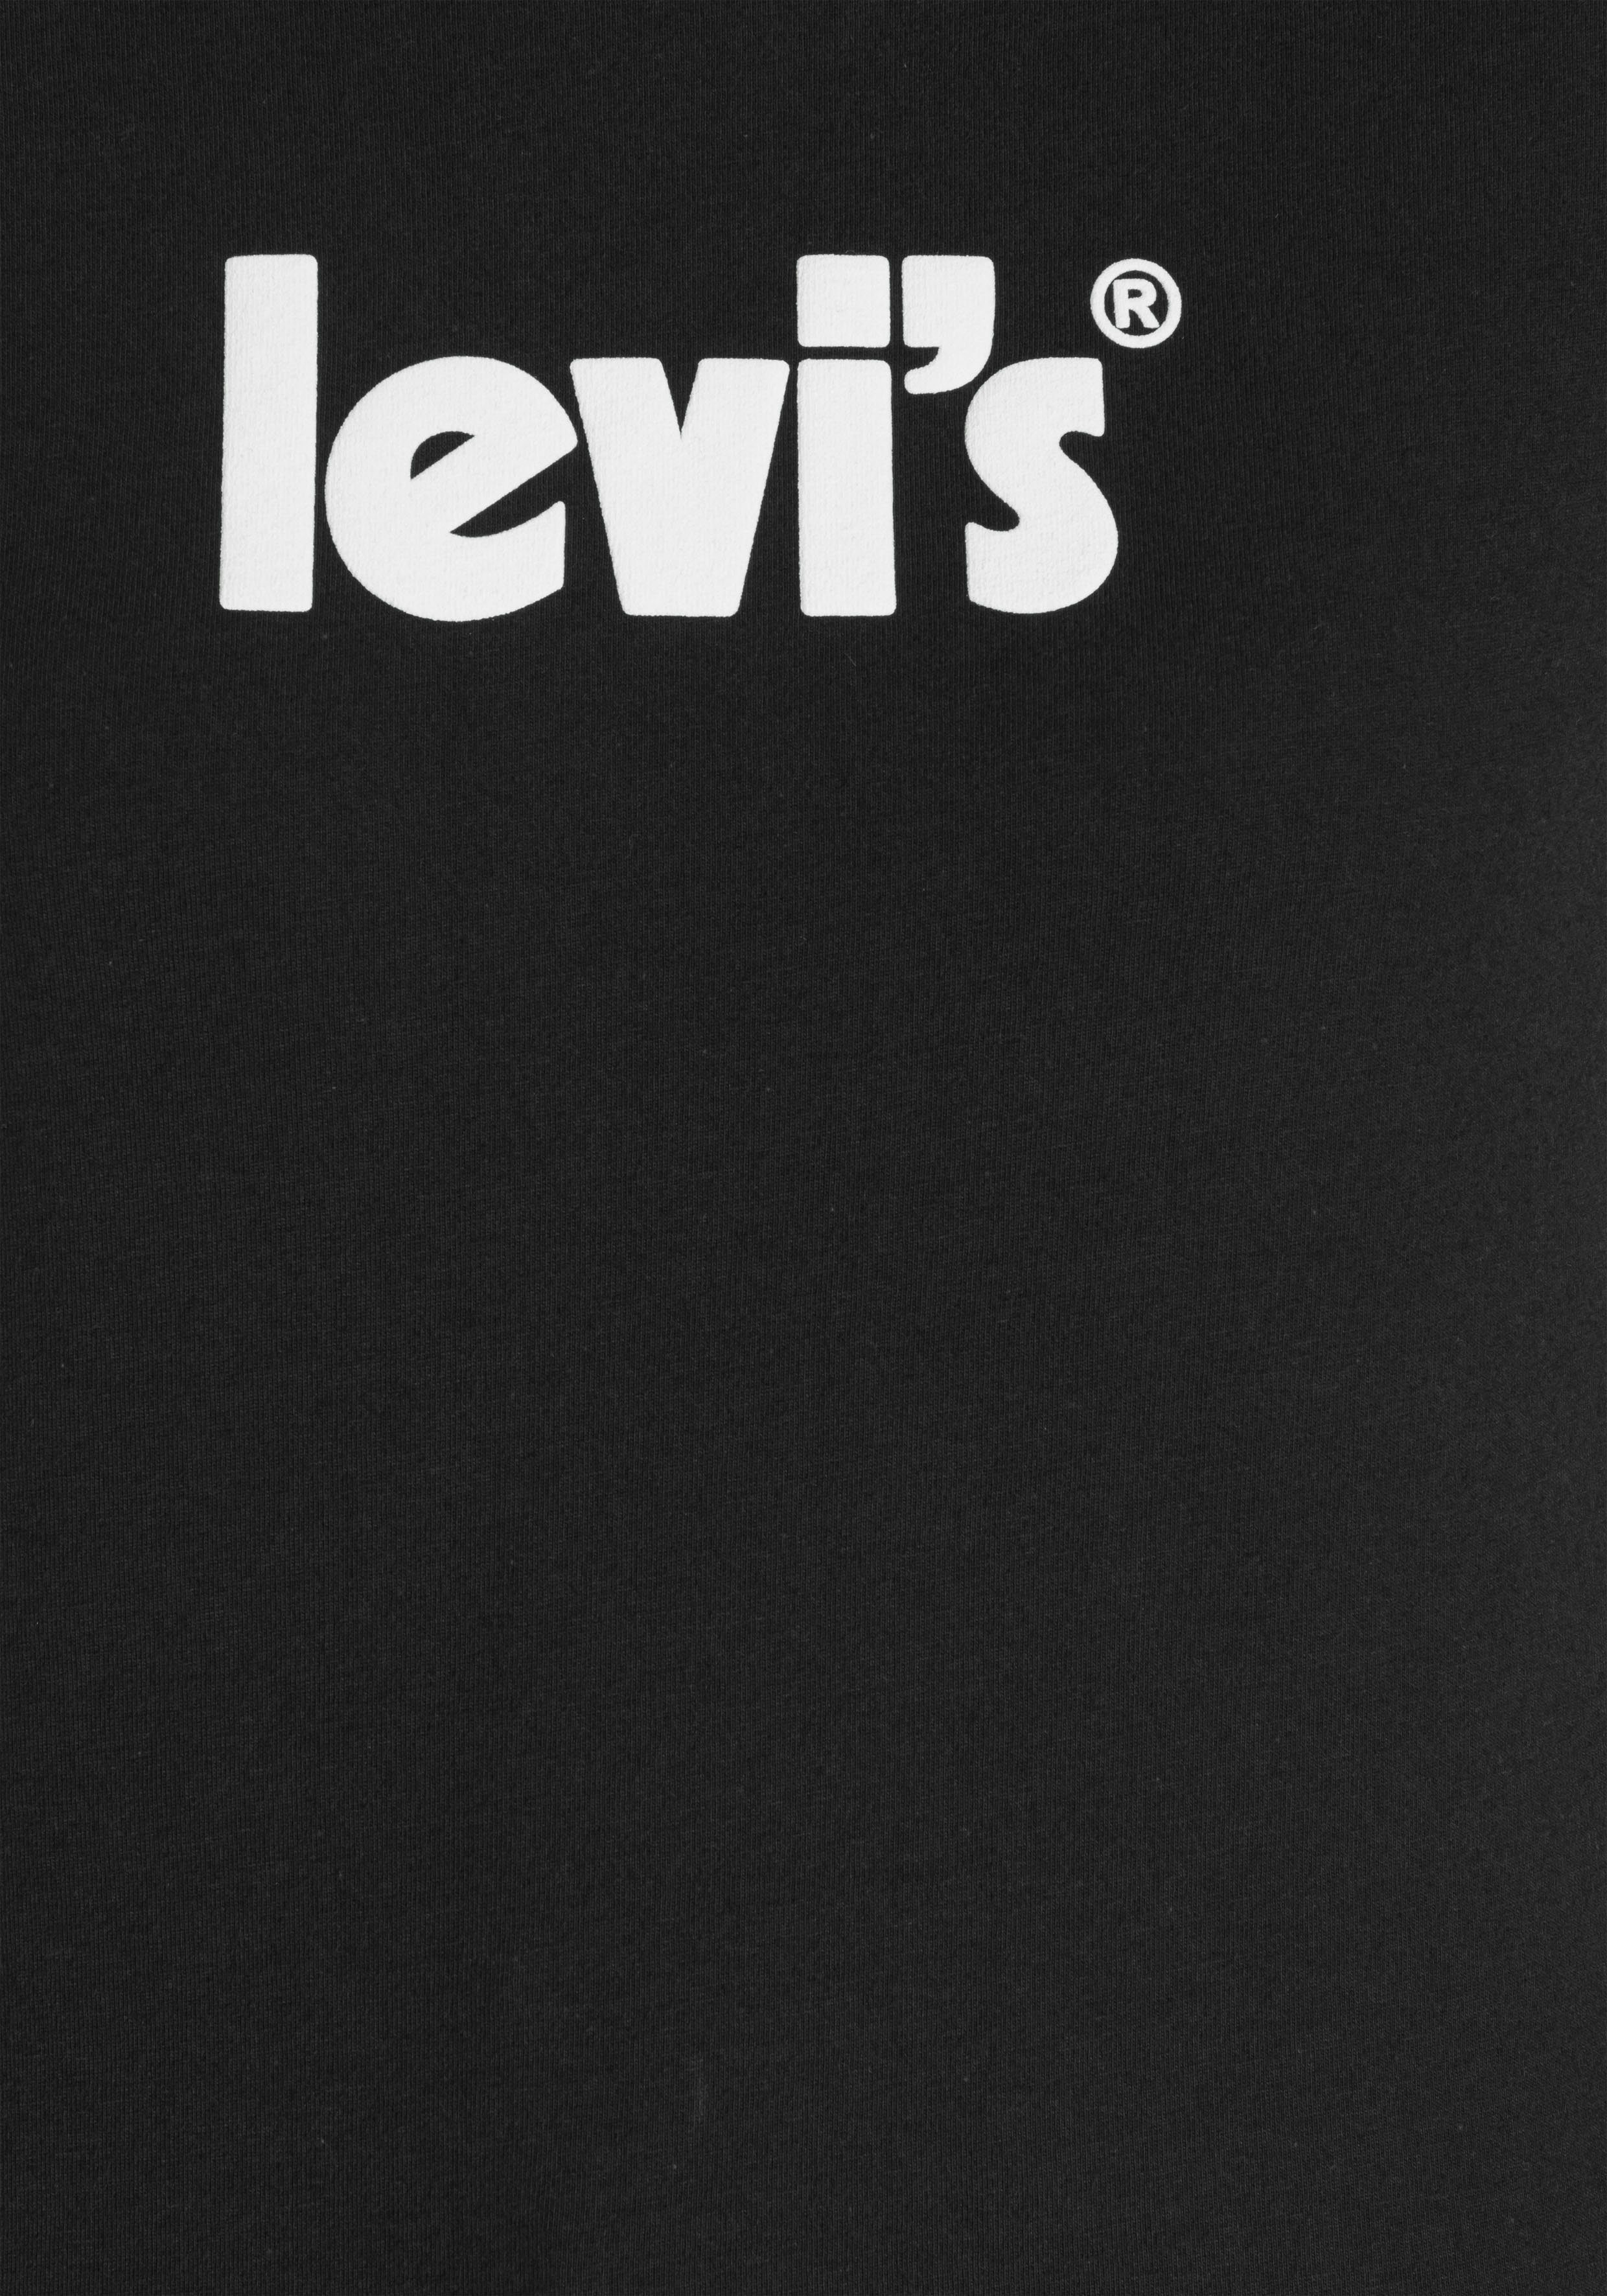 THE PERFECT Levi's® TEE T-Shirt Mit schwarz Markenschriftzug